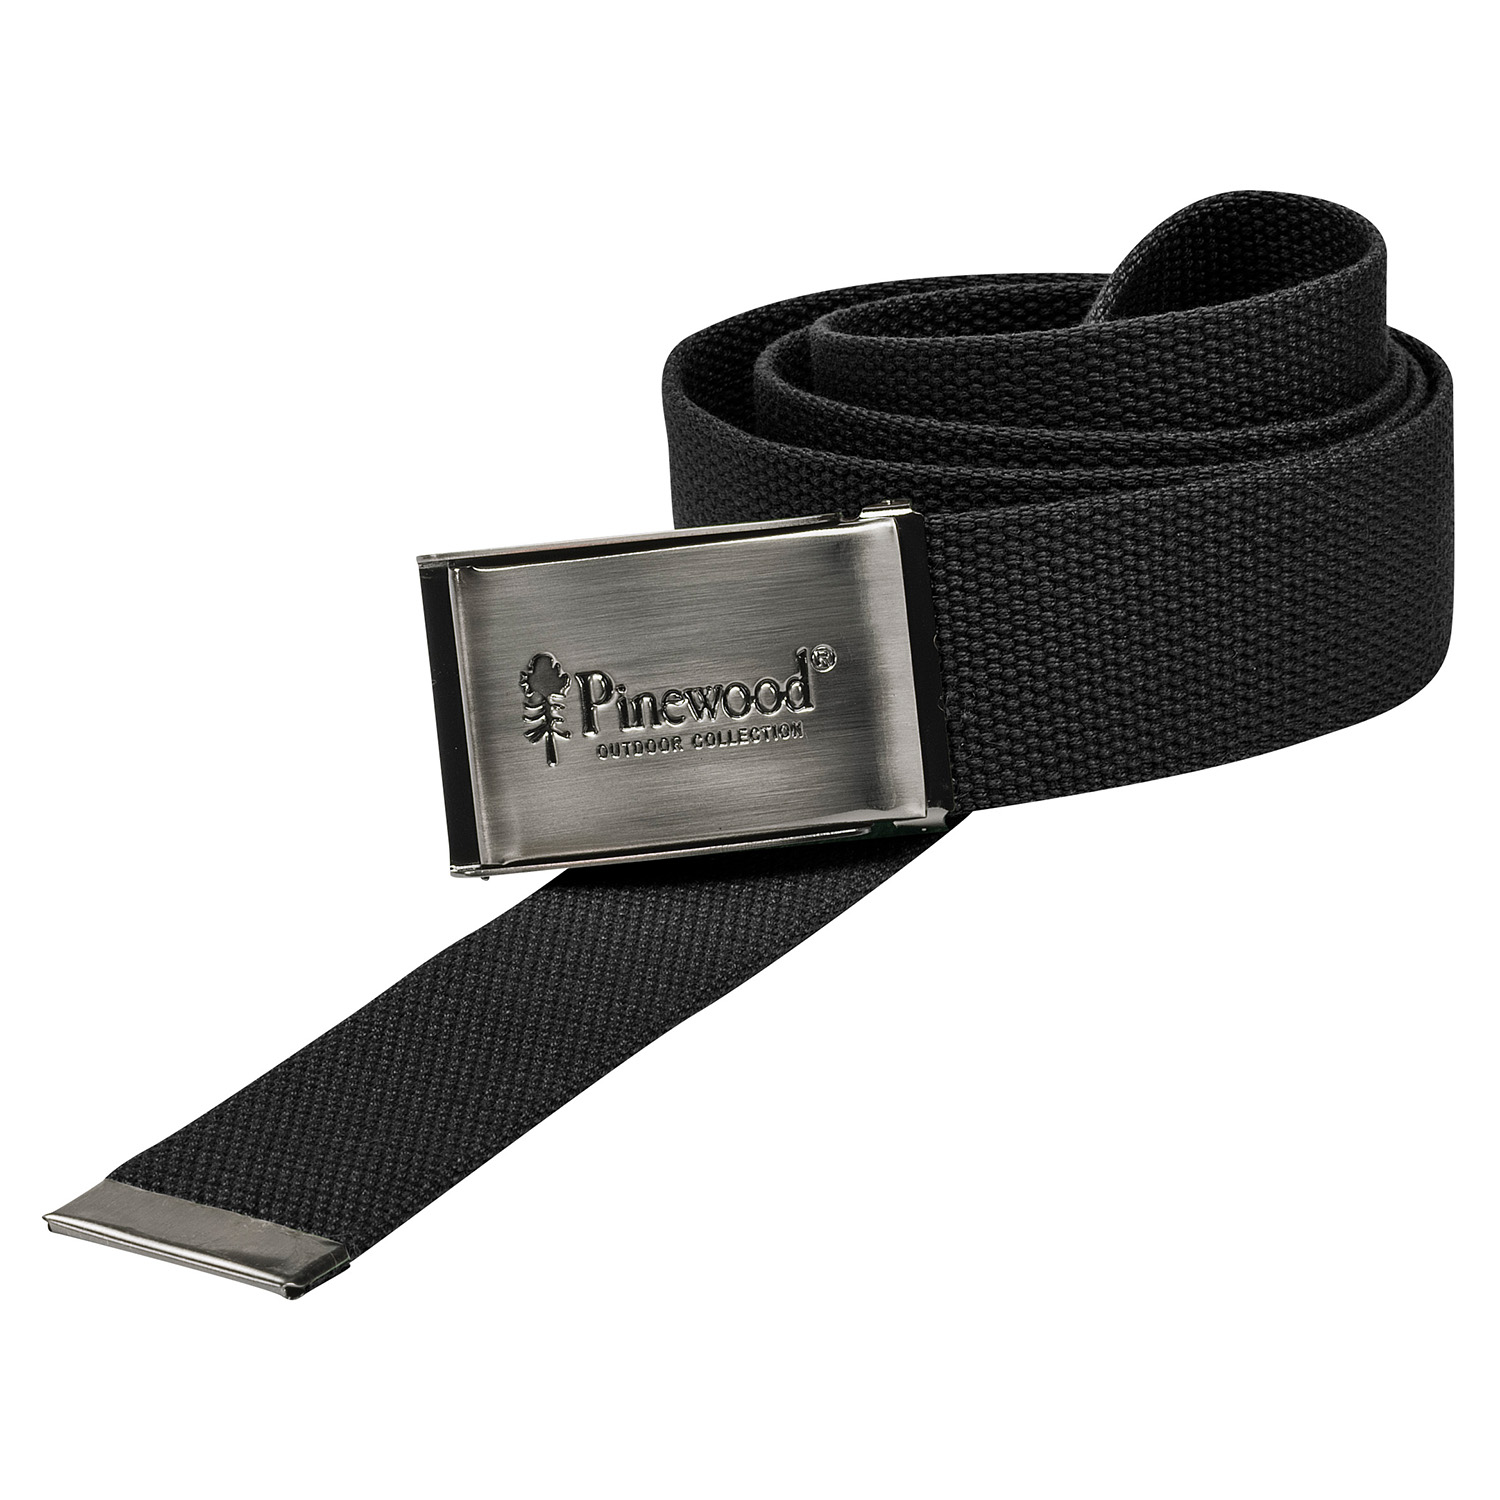 Pinewod Belt Canvas (schwarz) - Belts & Suspenders